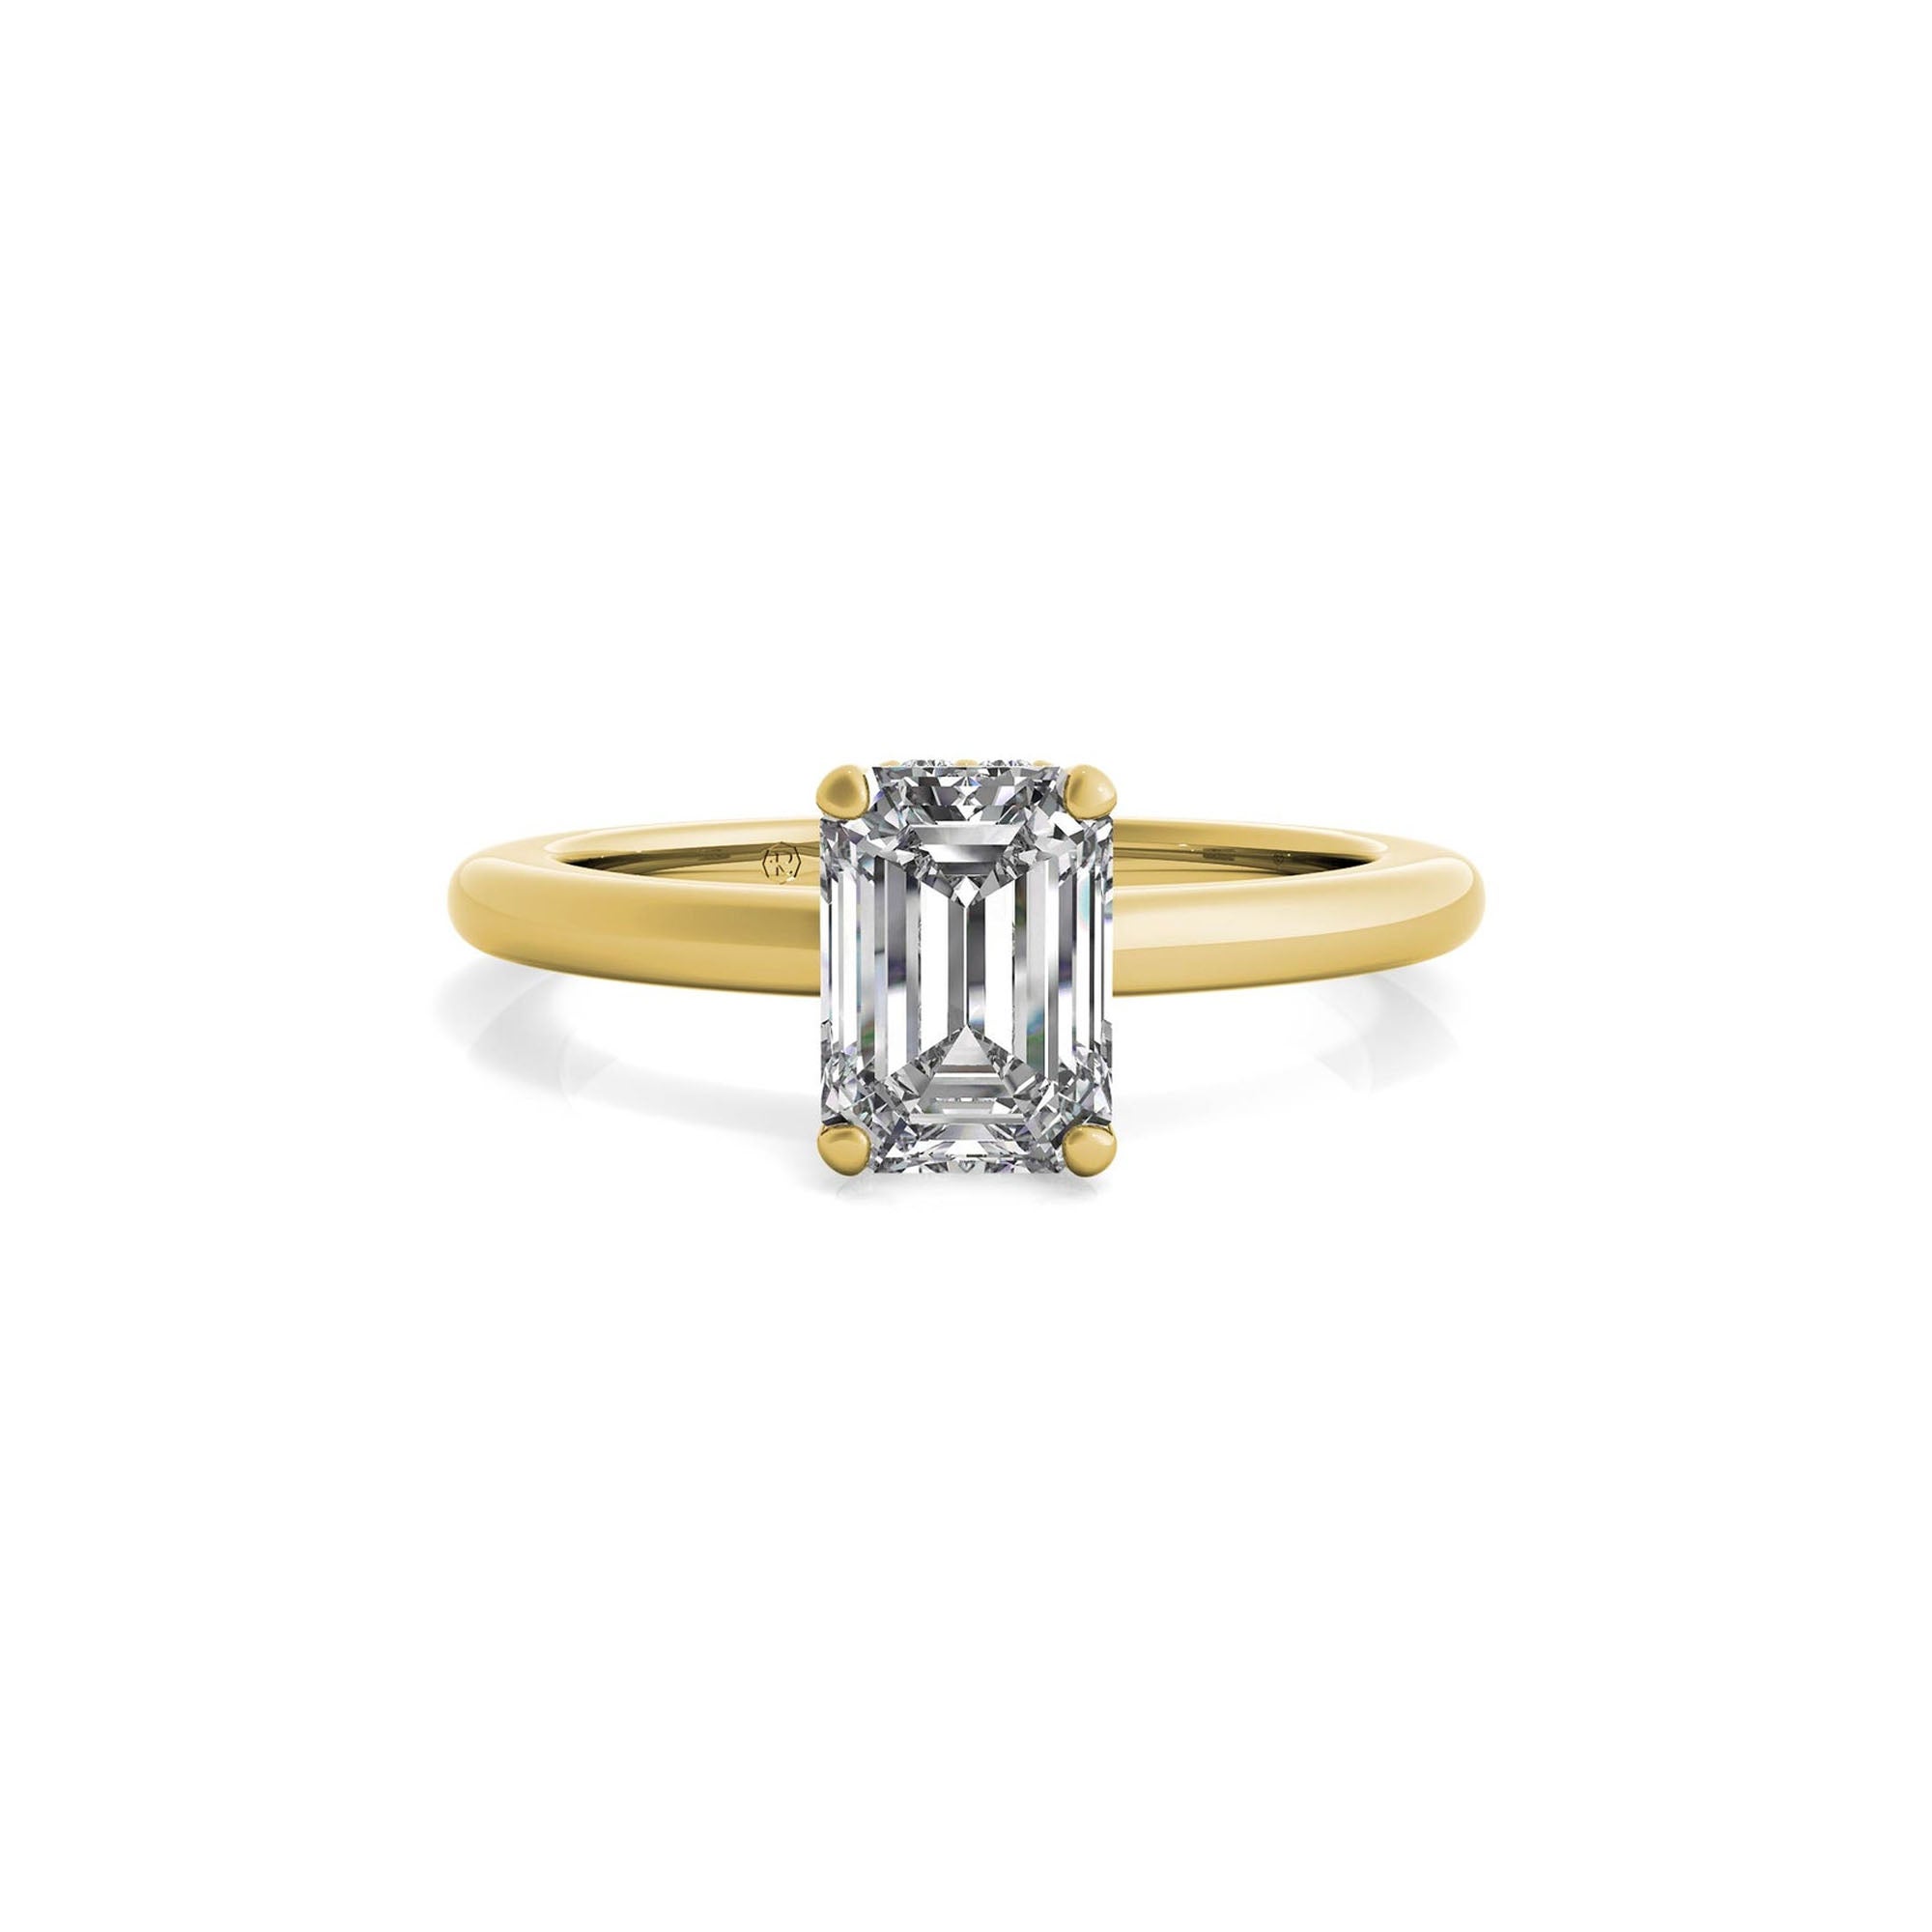 Ritani emerald cut engagement ring